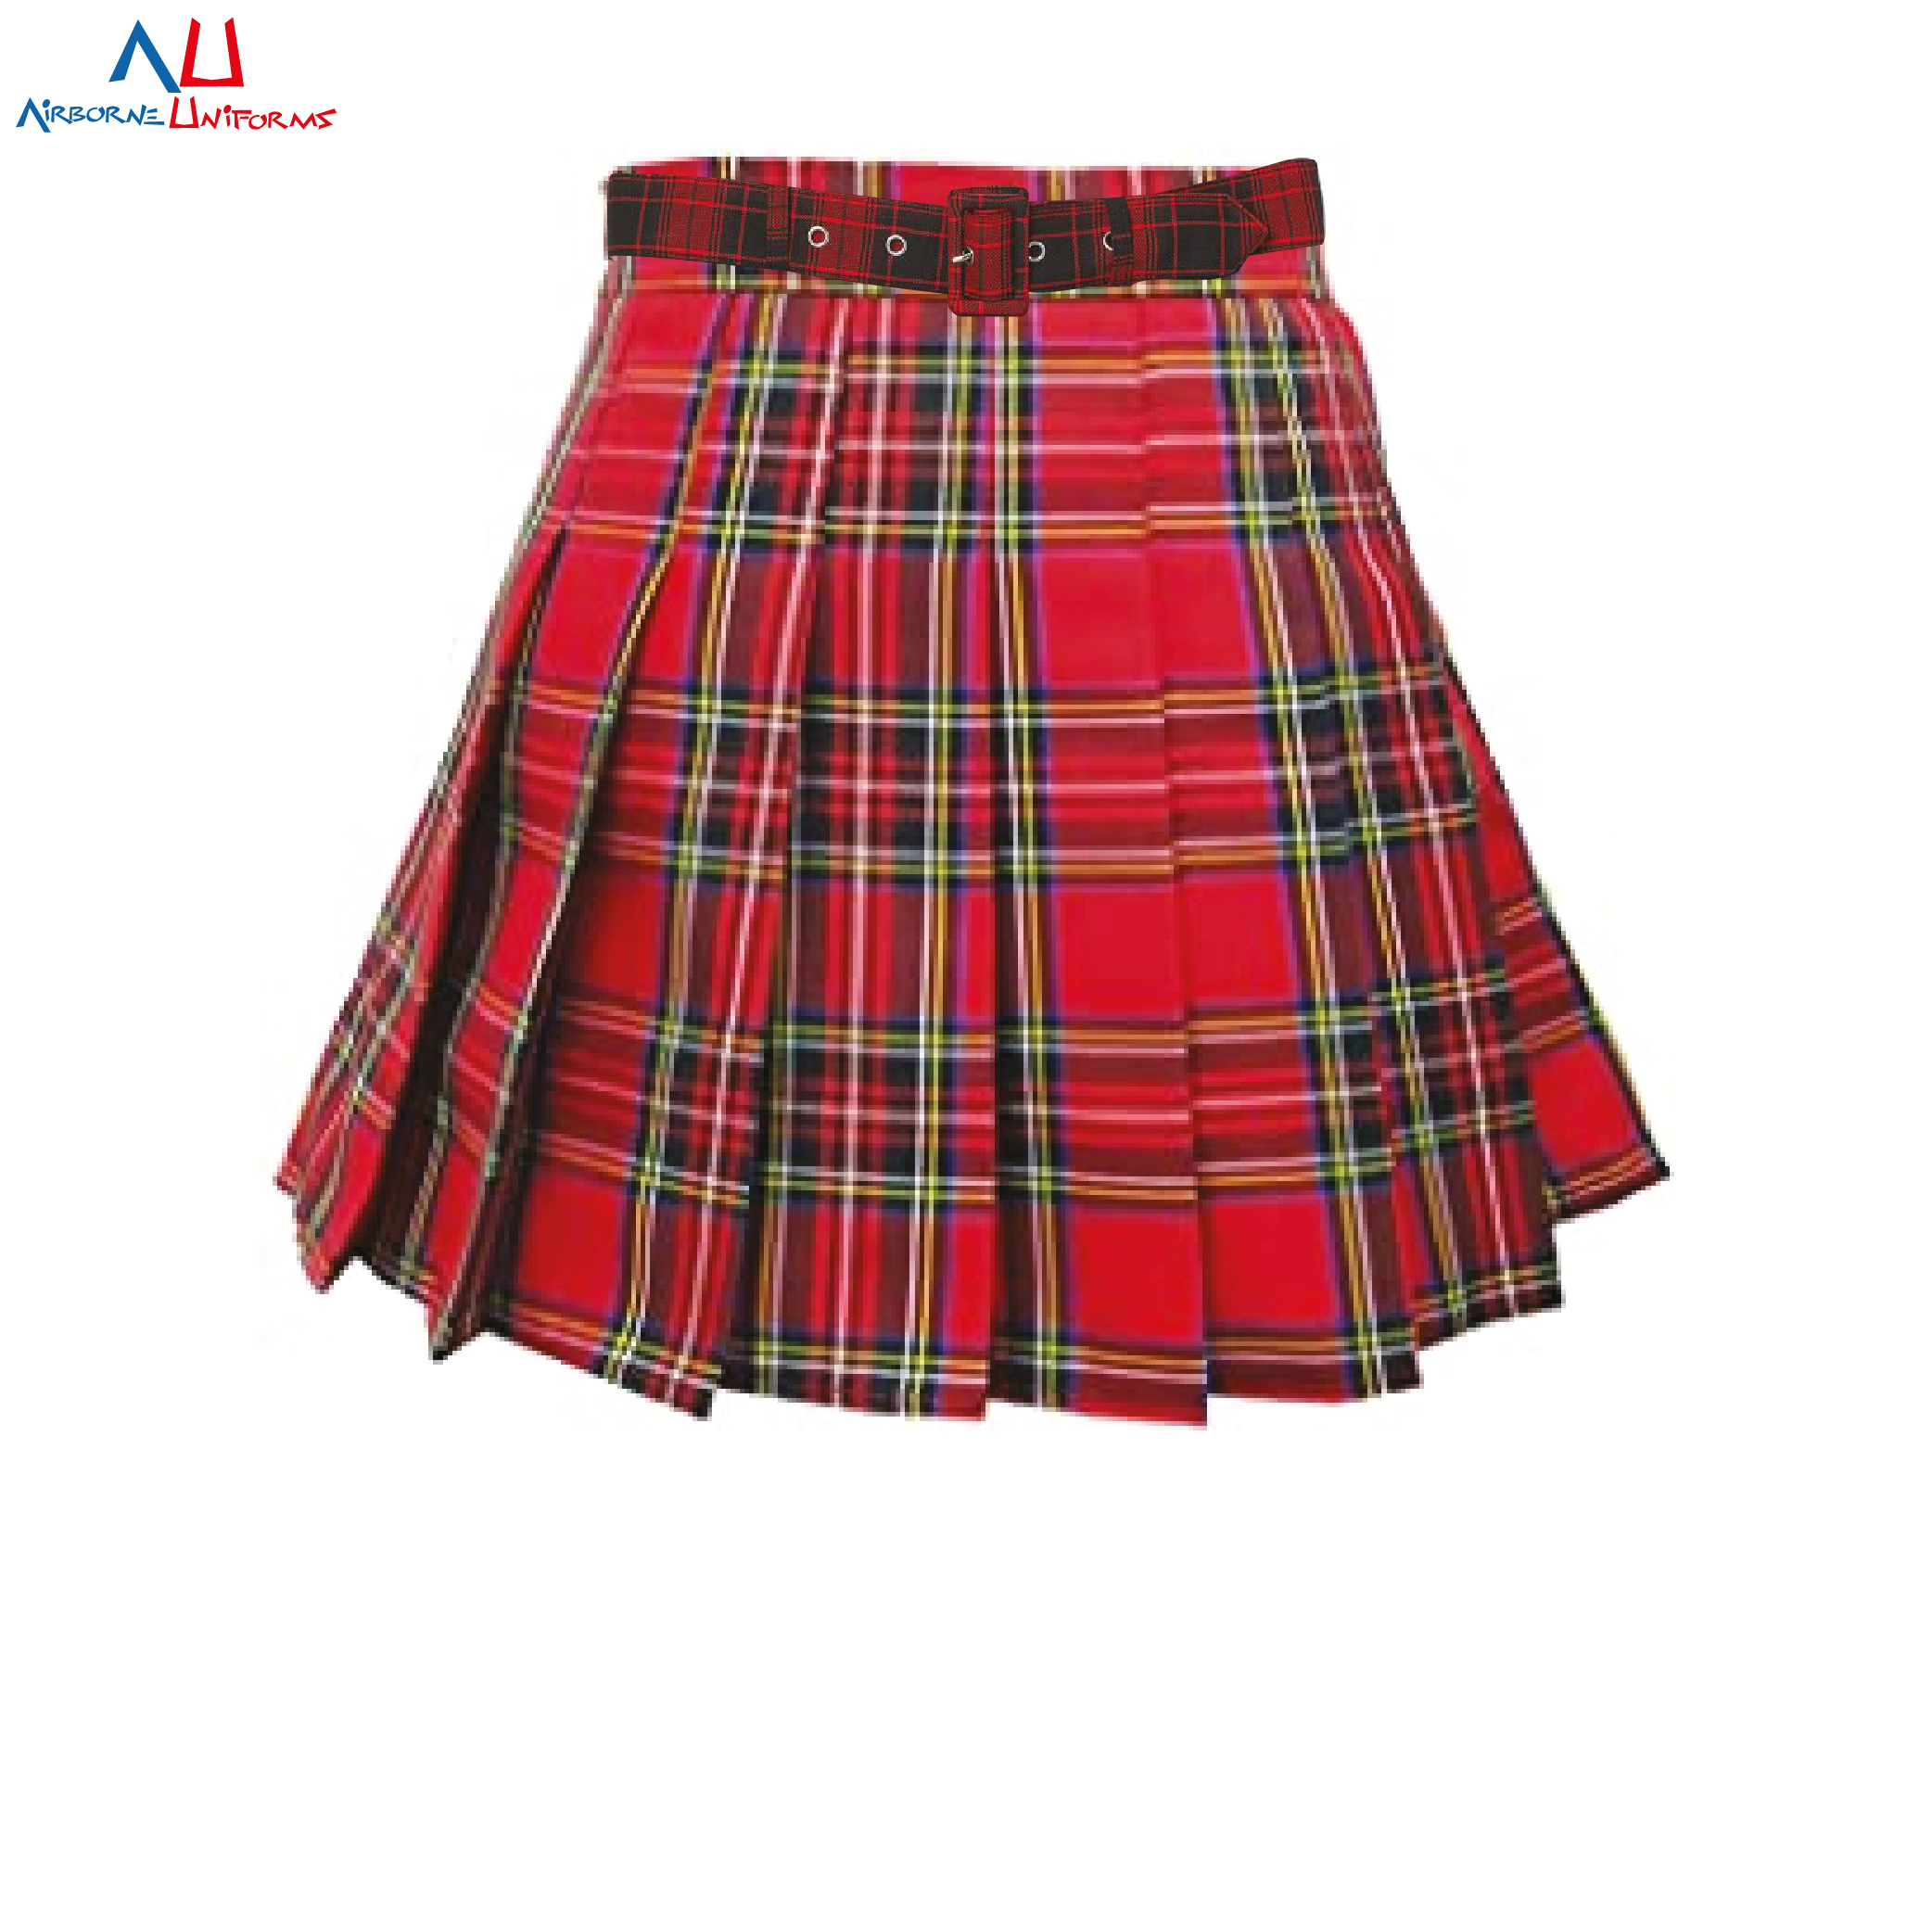 Herald International School Red Plaid Girls Short Skirt | Airborne Uniforms